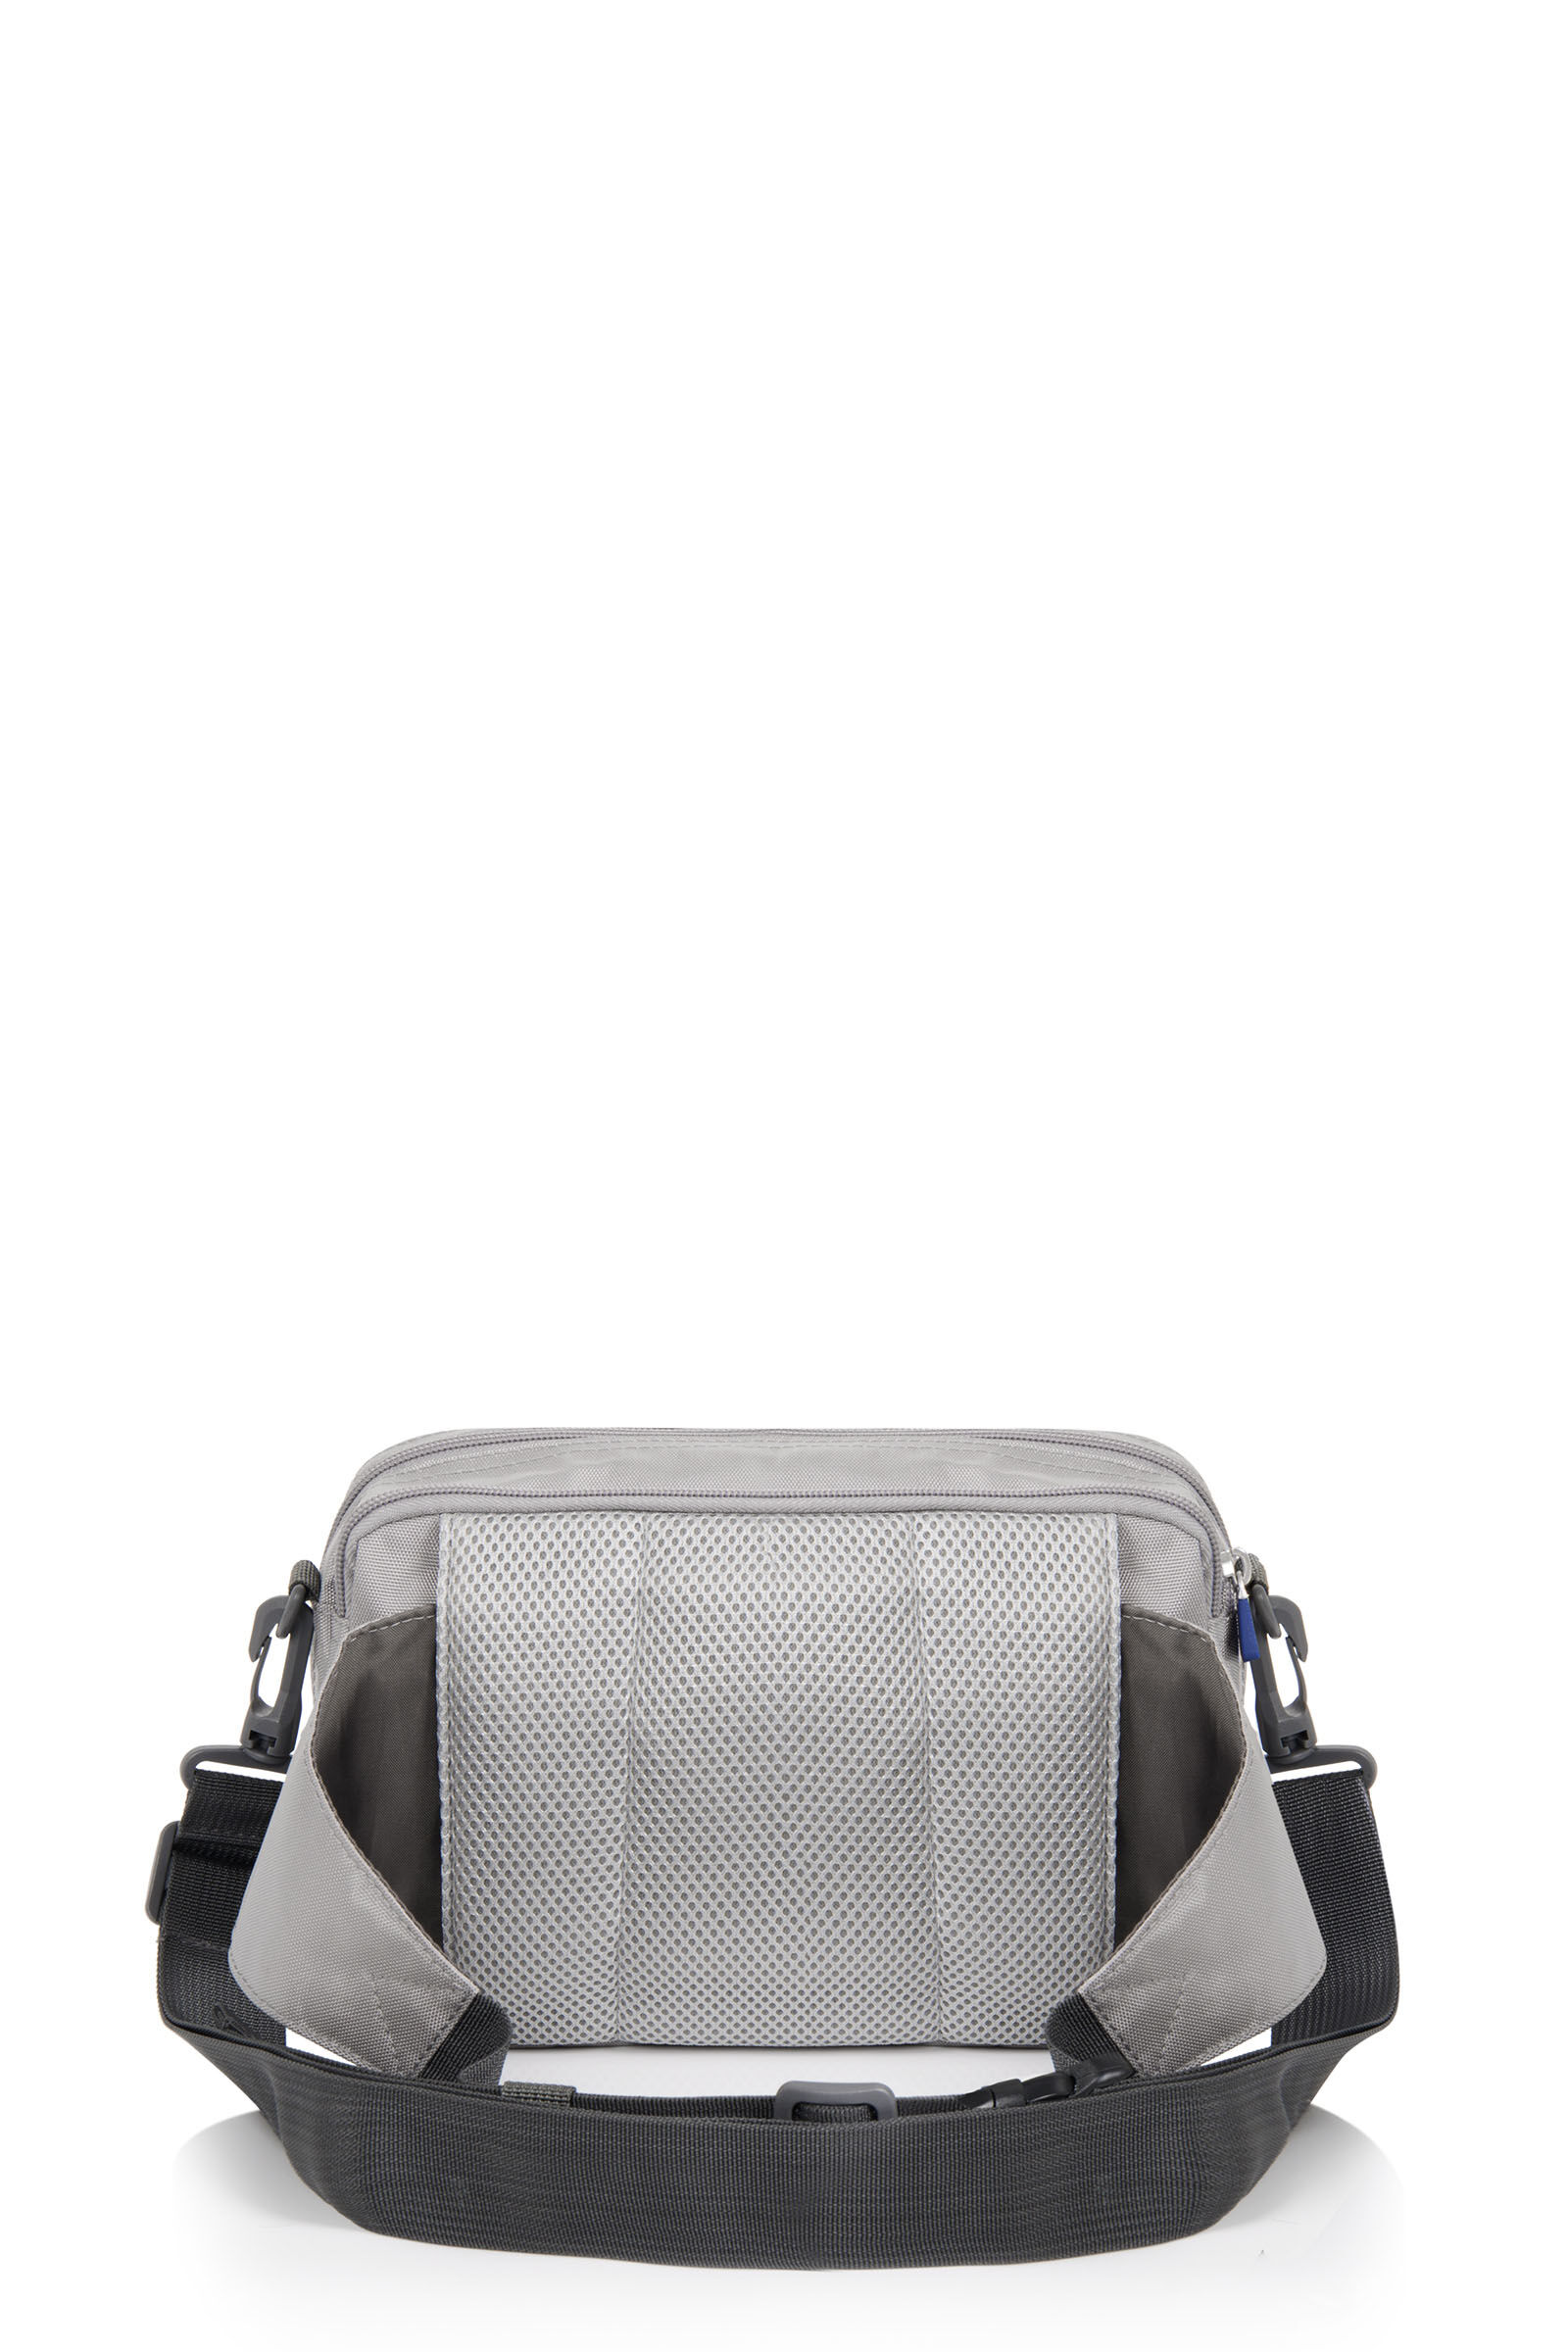 Samsonite Egypt - The Bags No.1 in Egypt Travel bag Backpack Cross bags  Laptop bags Leah